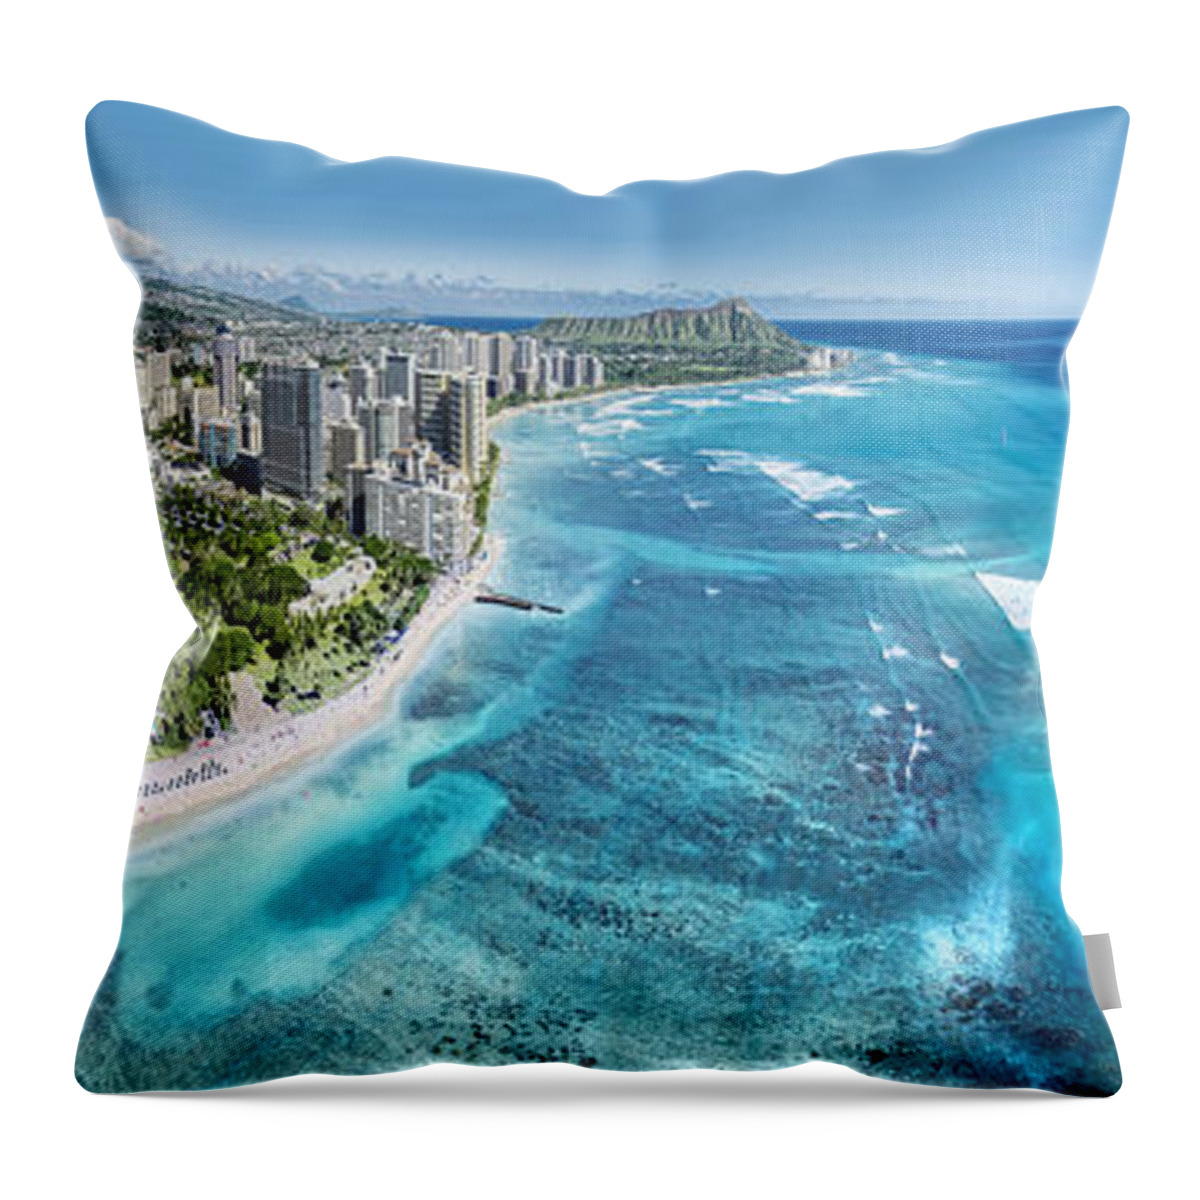 Waikiki Throw Pillow featuring the photograph Waikiki Wonderland by Sean Davey